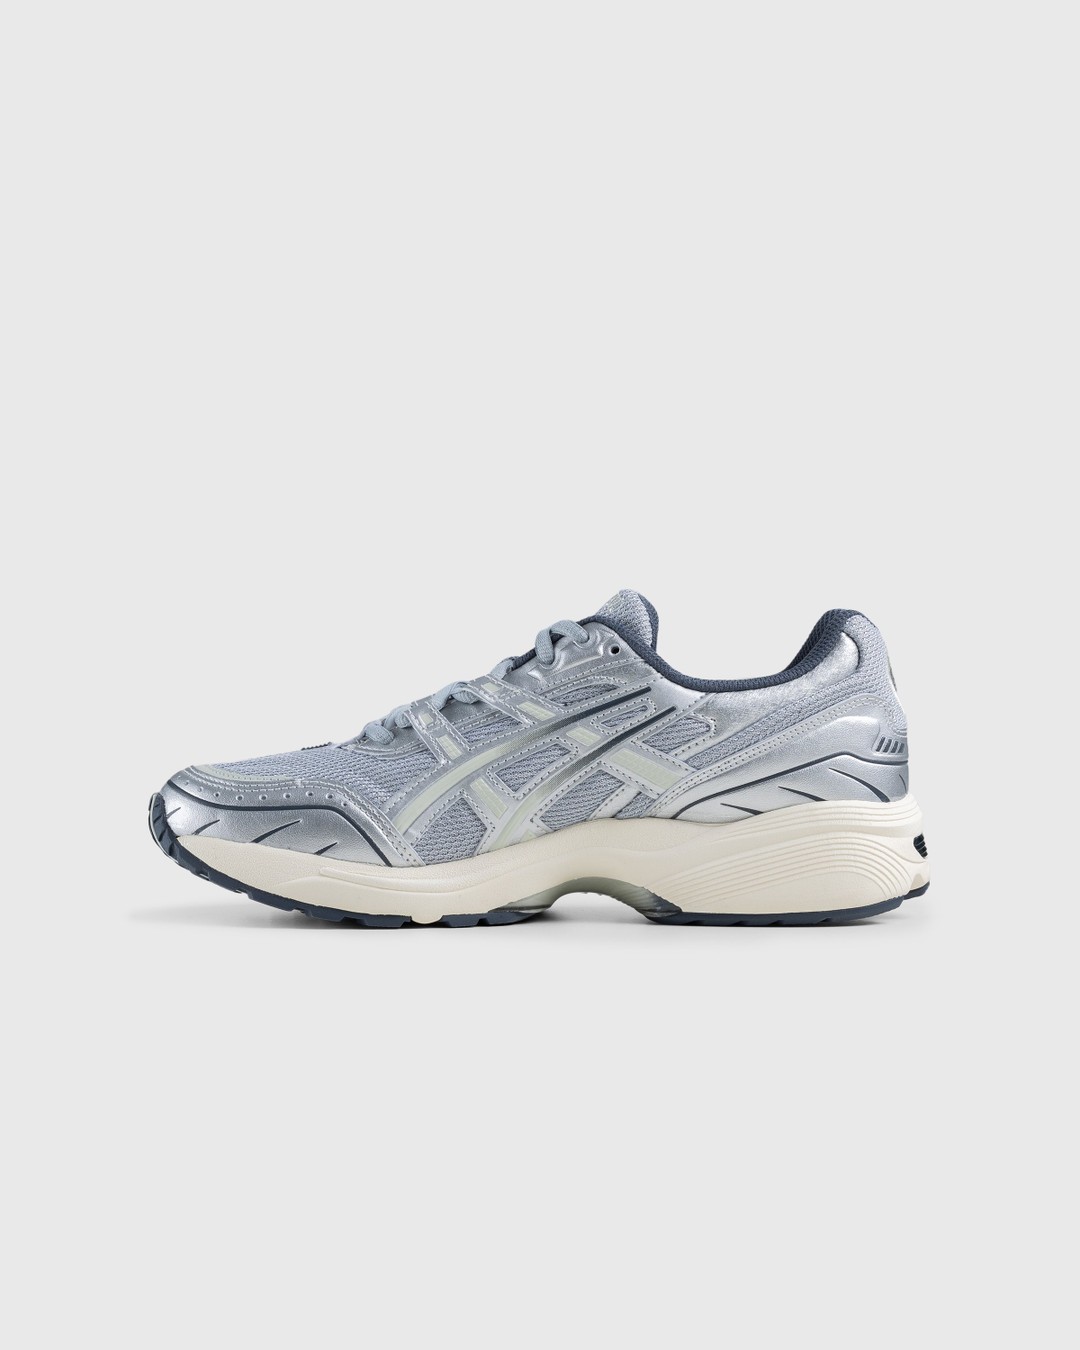 asics – GEL-1090 Piedmont Gray/Tarmac - Sneakers - Silver - Image 2